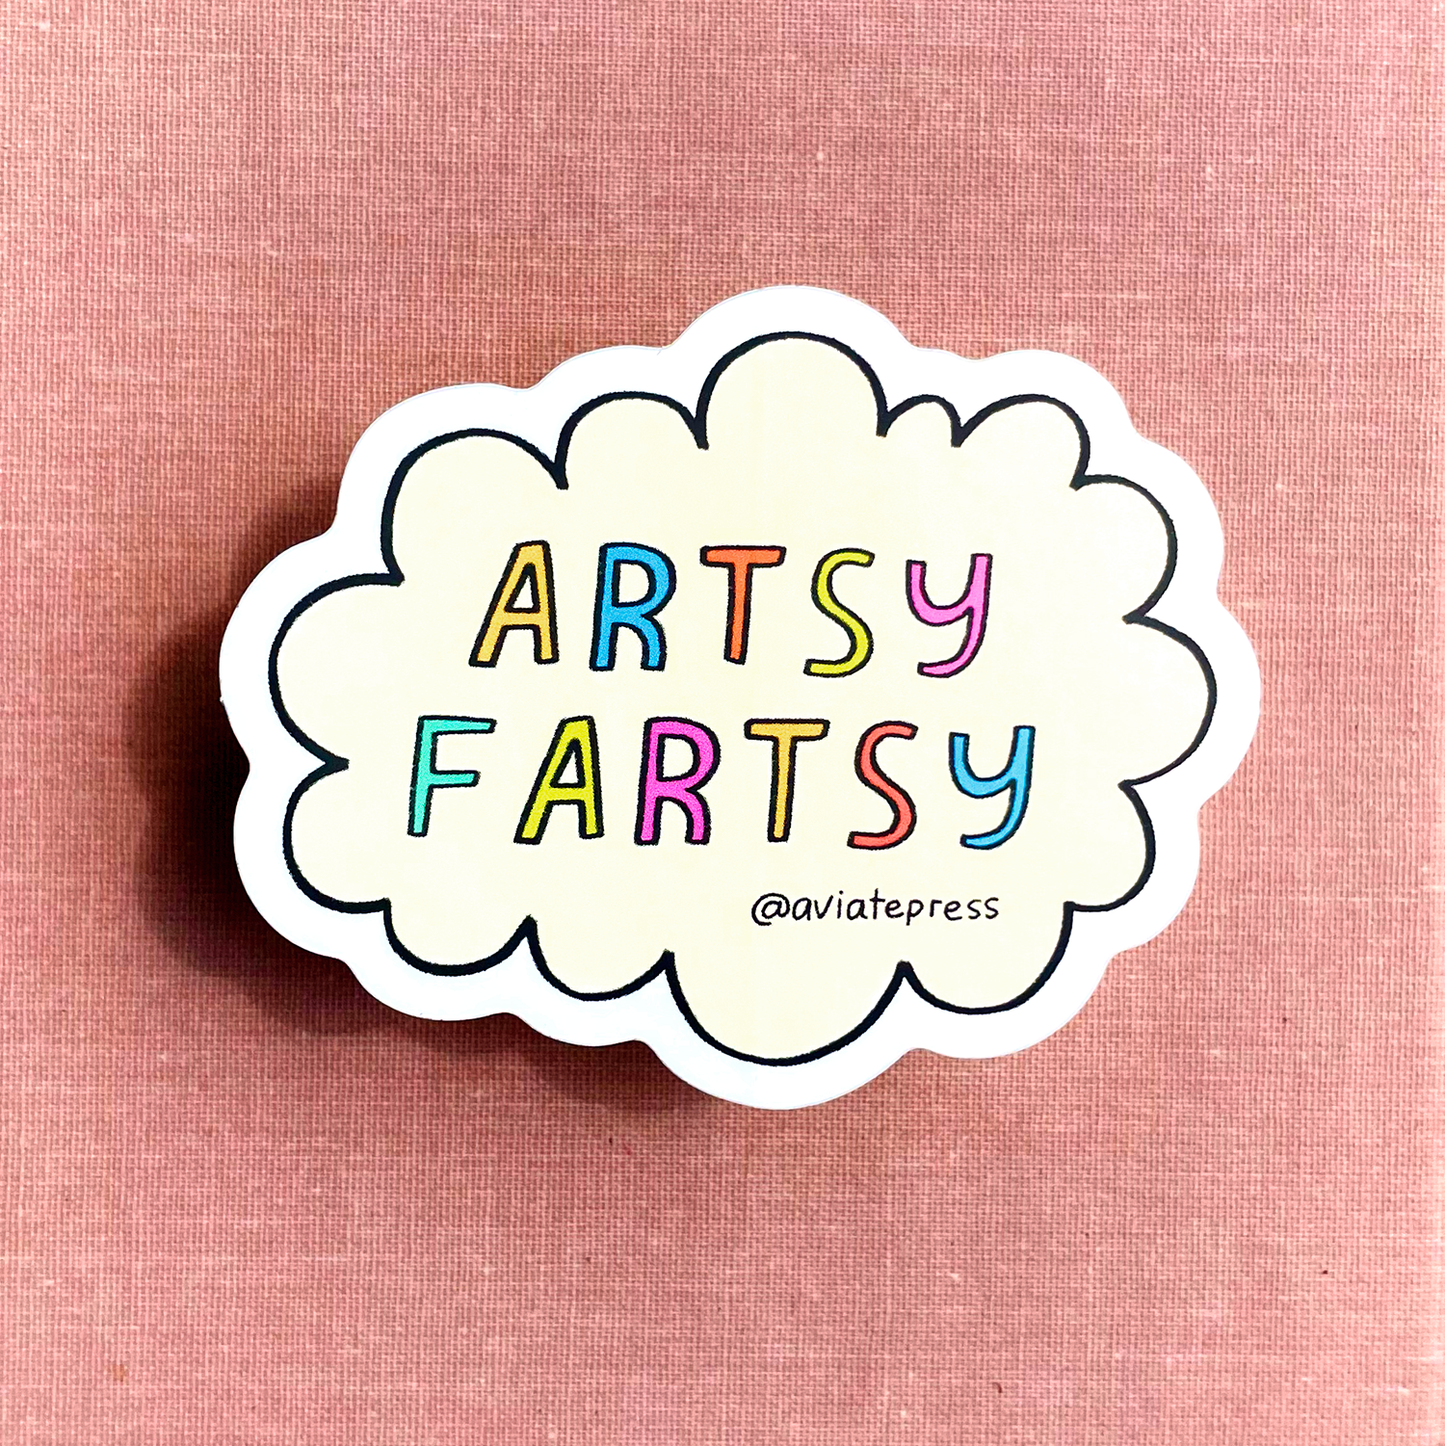 Artsy Fartsy Sticker